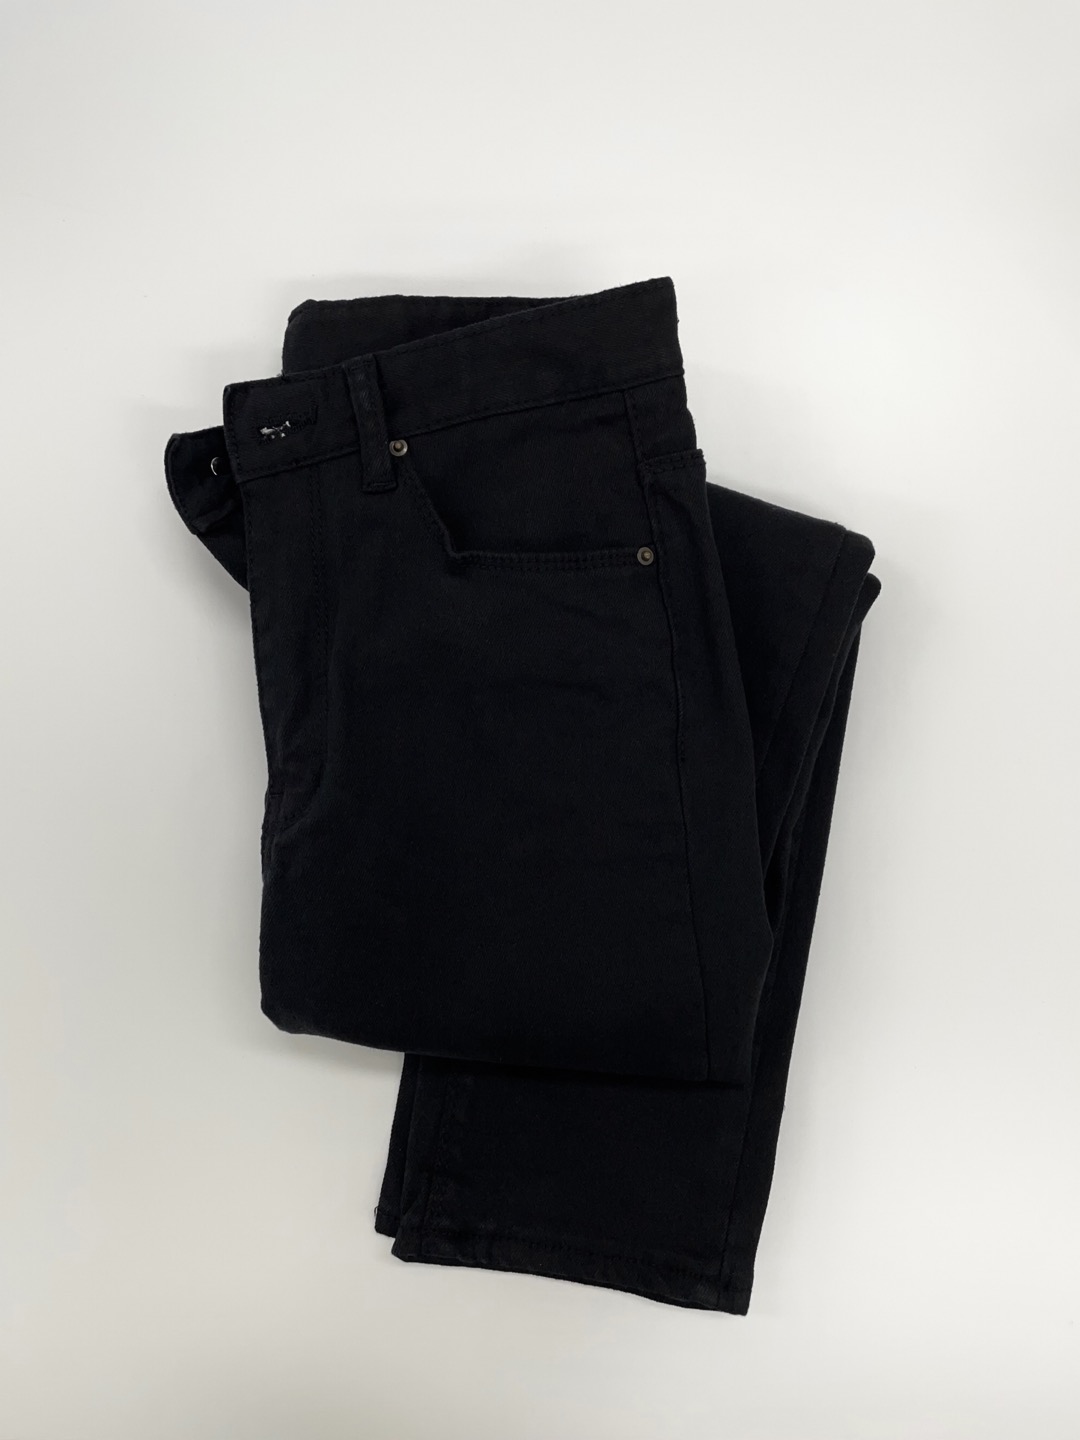 soft black pants